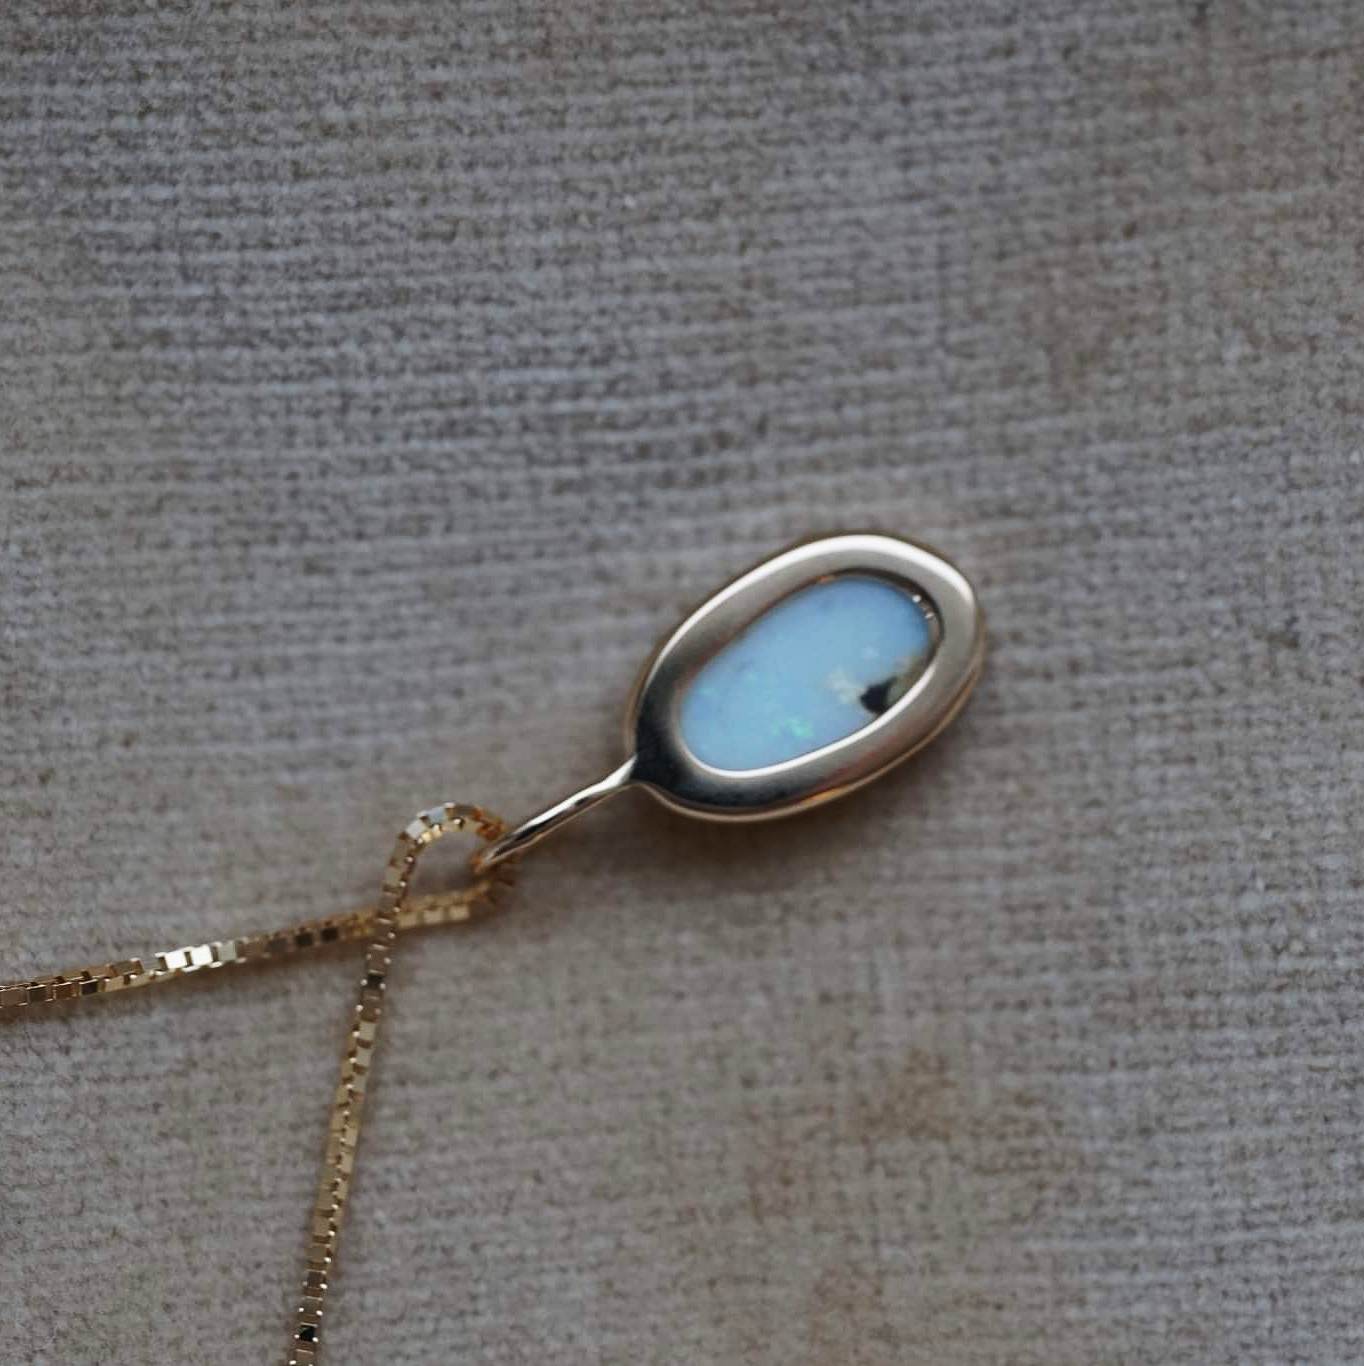 "Opal" pendant in gold